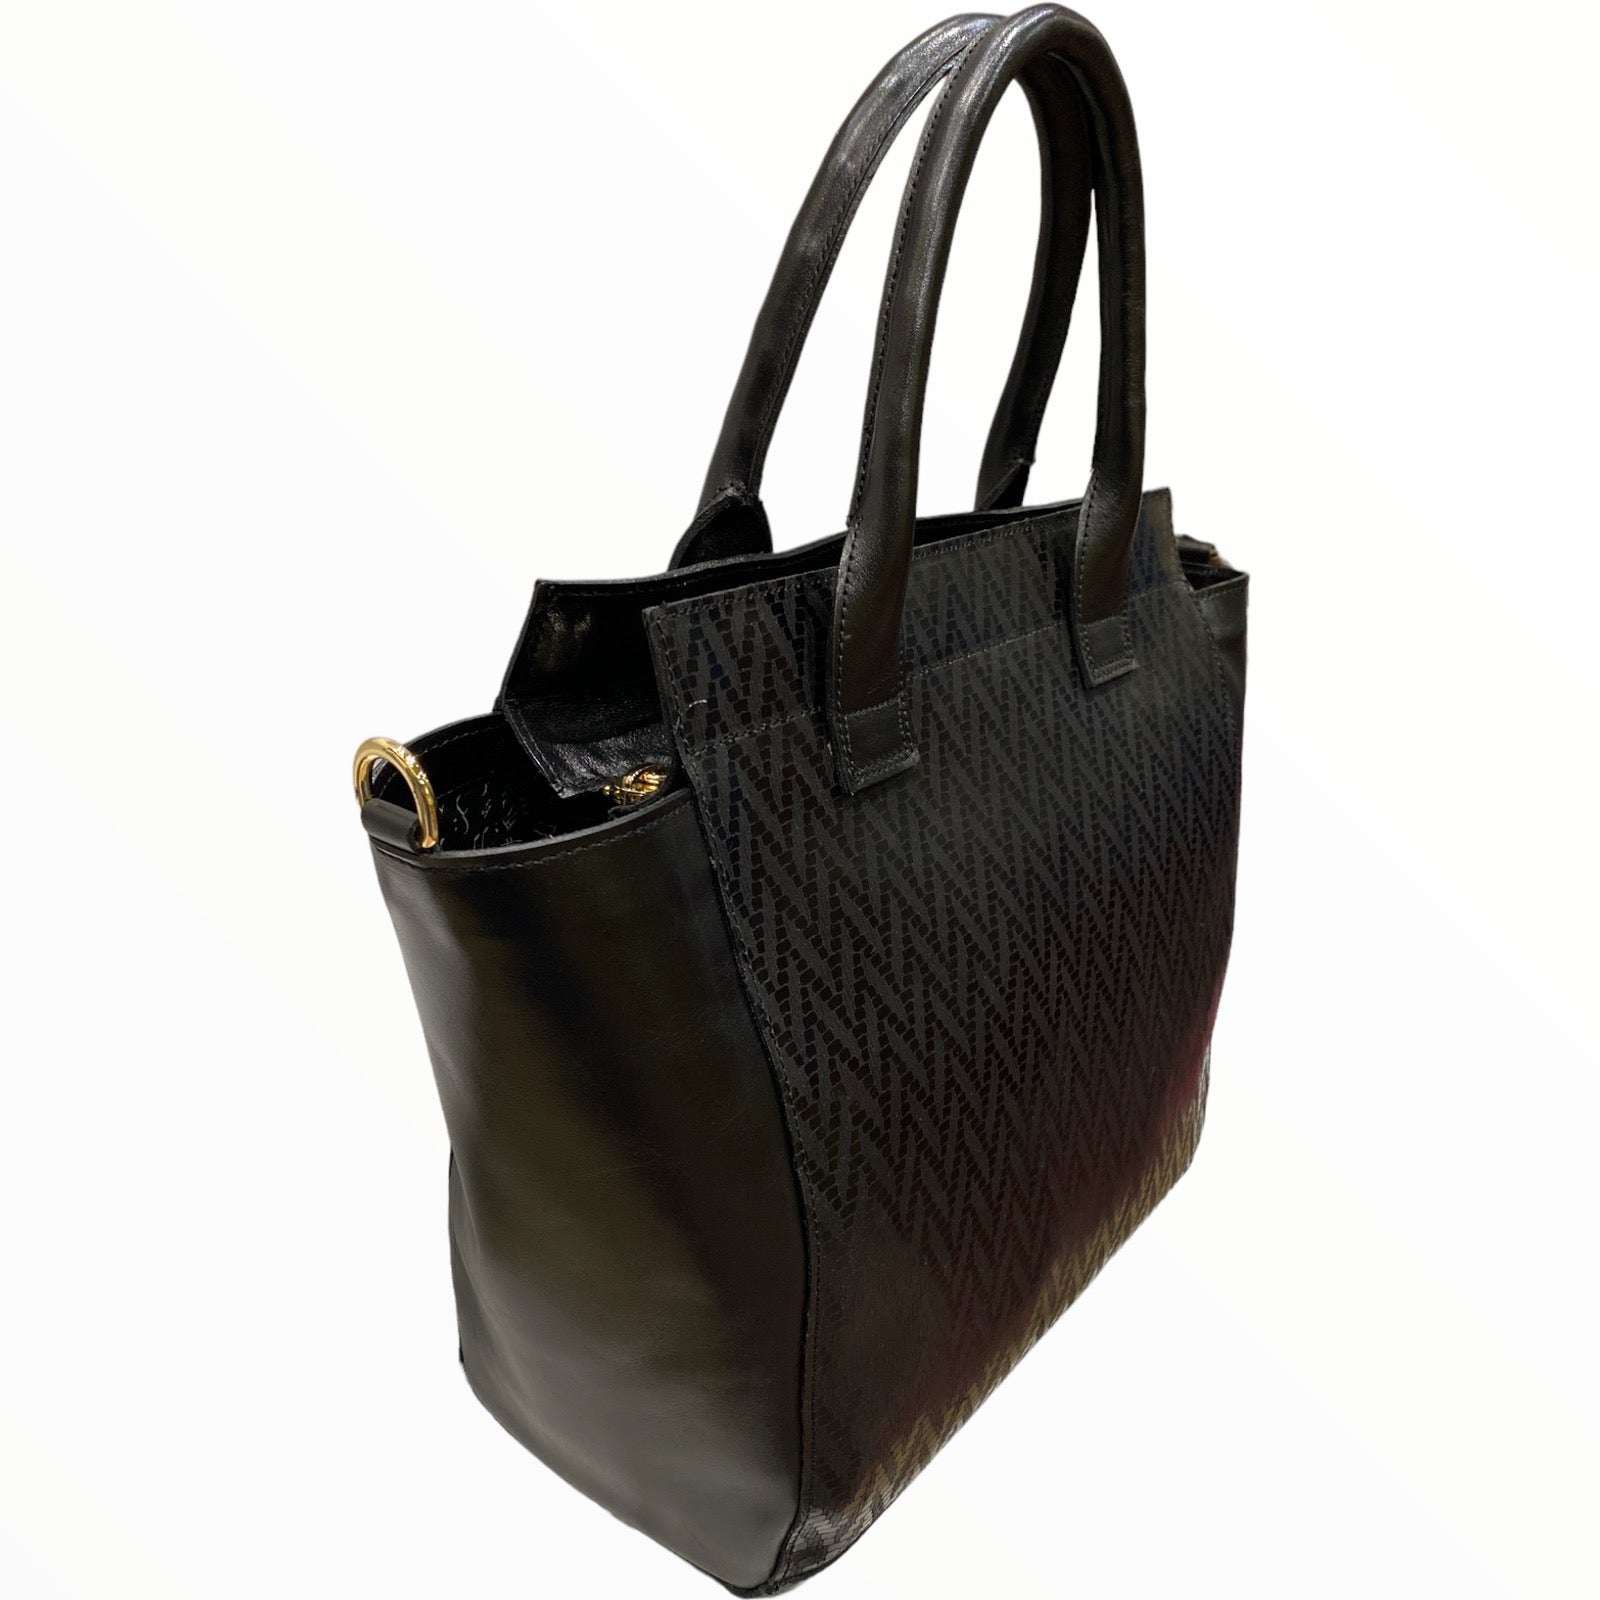 Gina large. Black geometric leather tote bag